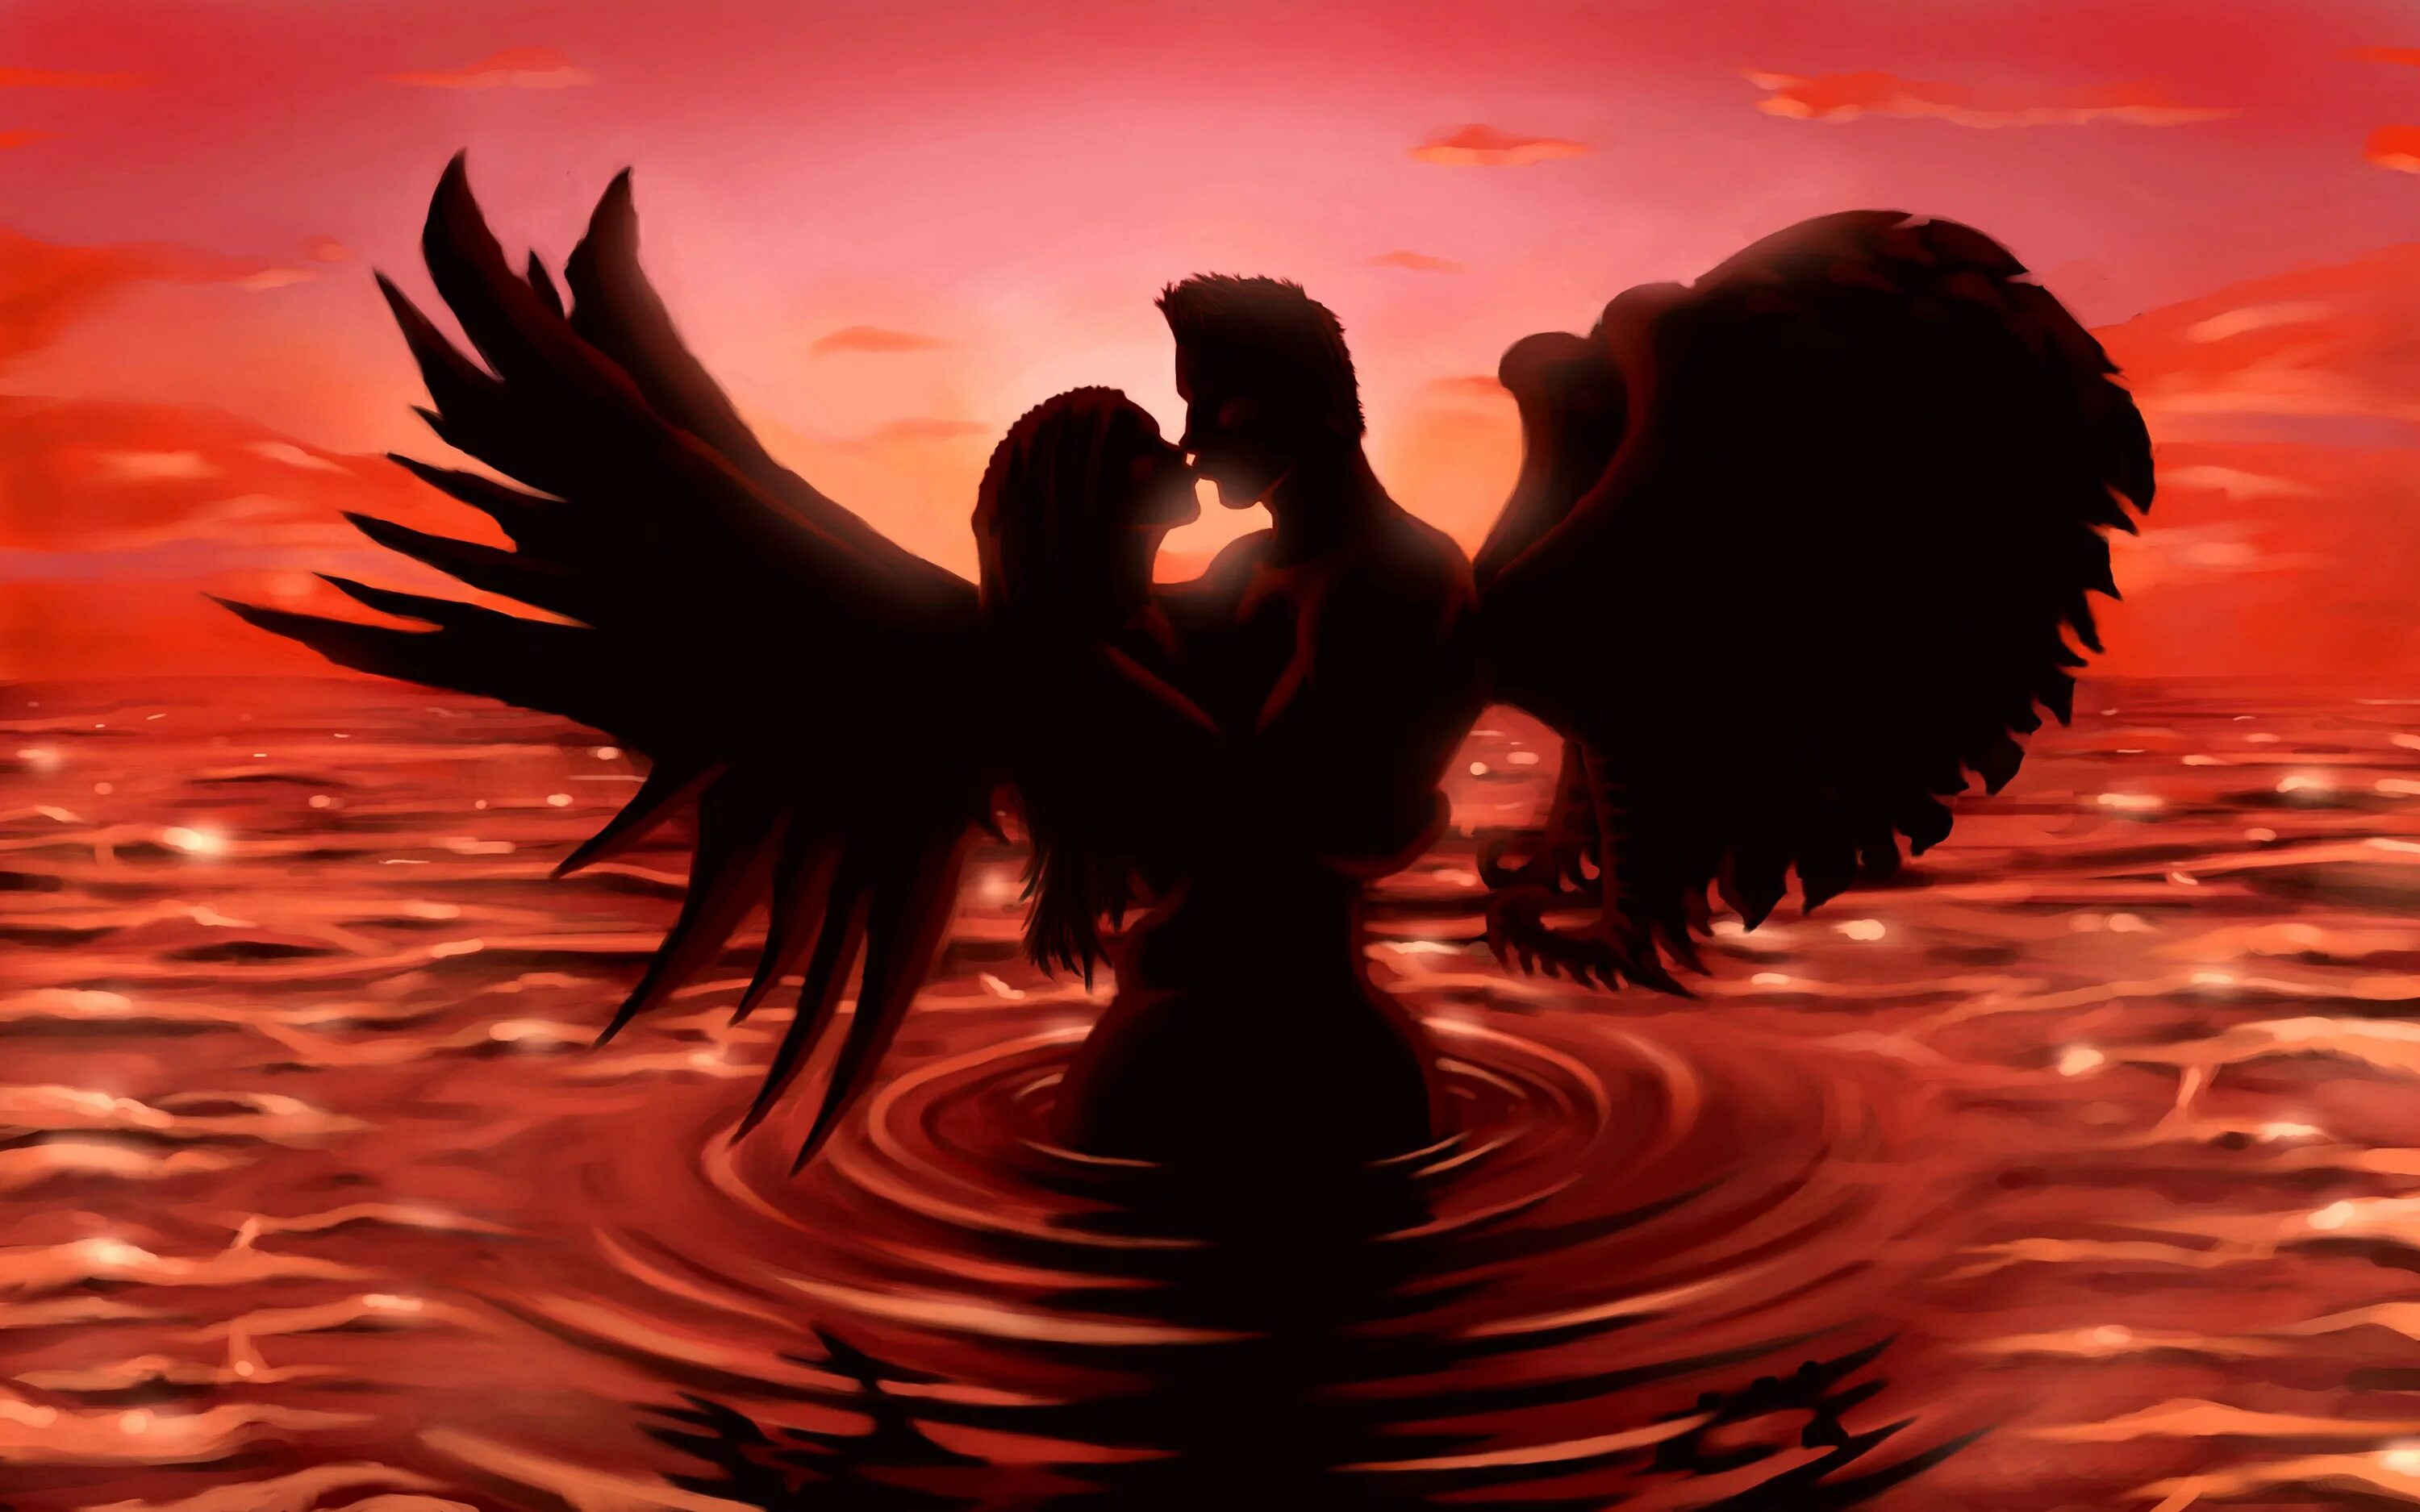 Angel s love. Влюбленный ангел. Ангел любви. Влюбленные ангелы. Влюбленные с крыльями.